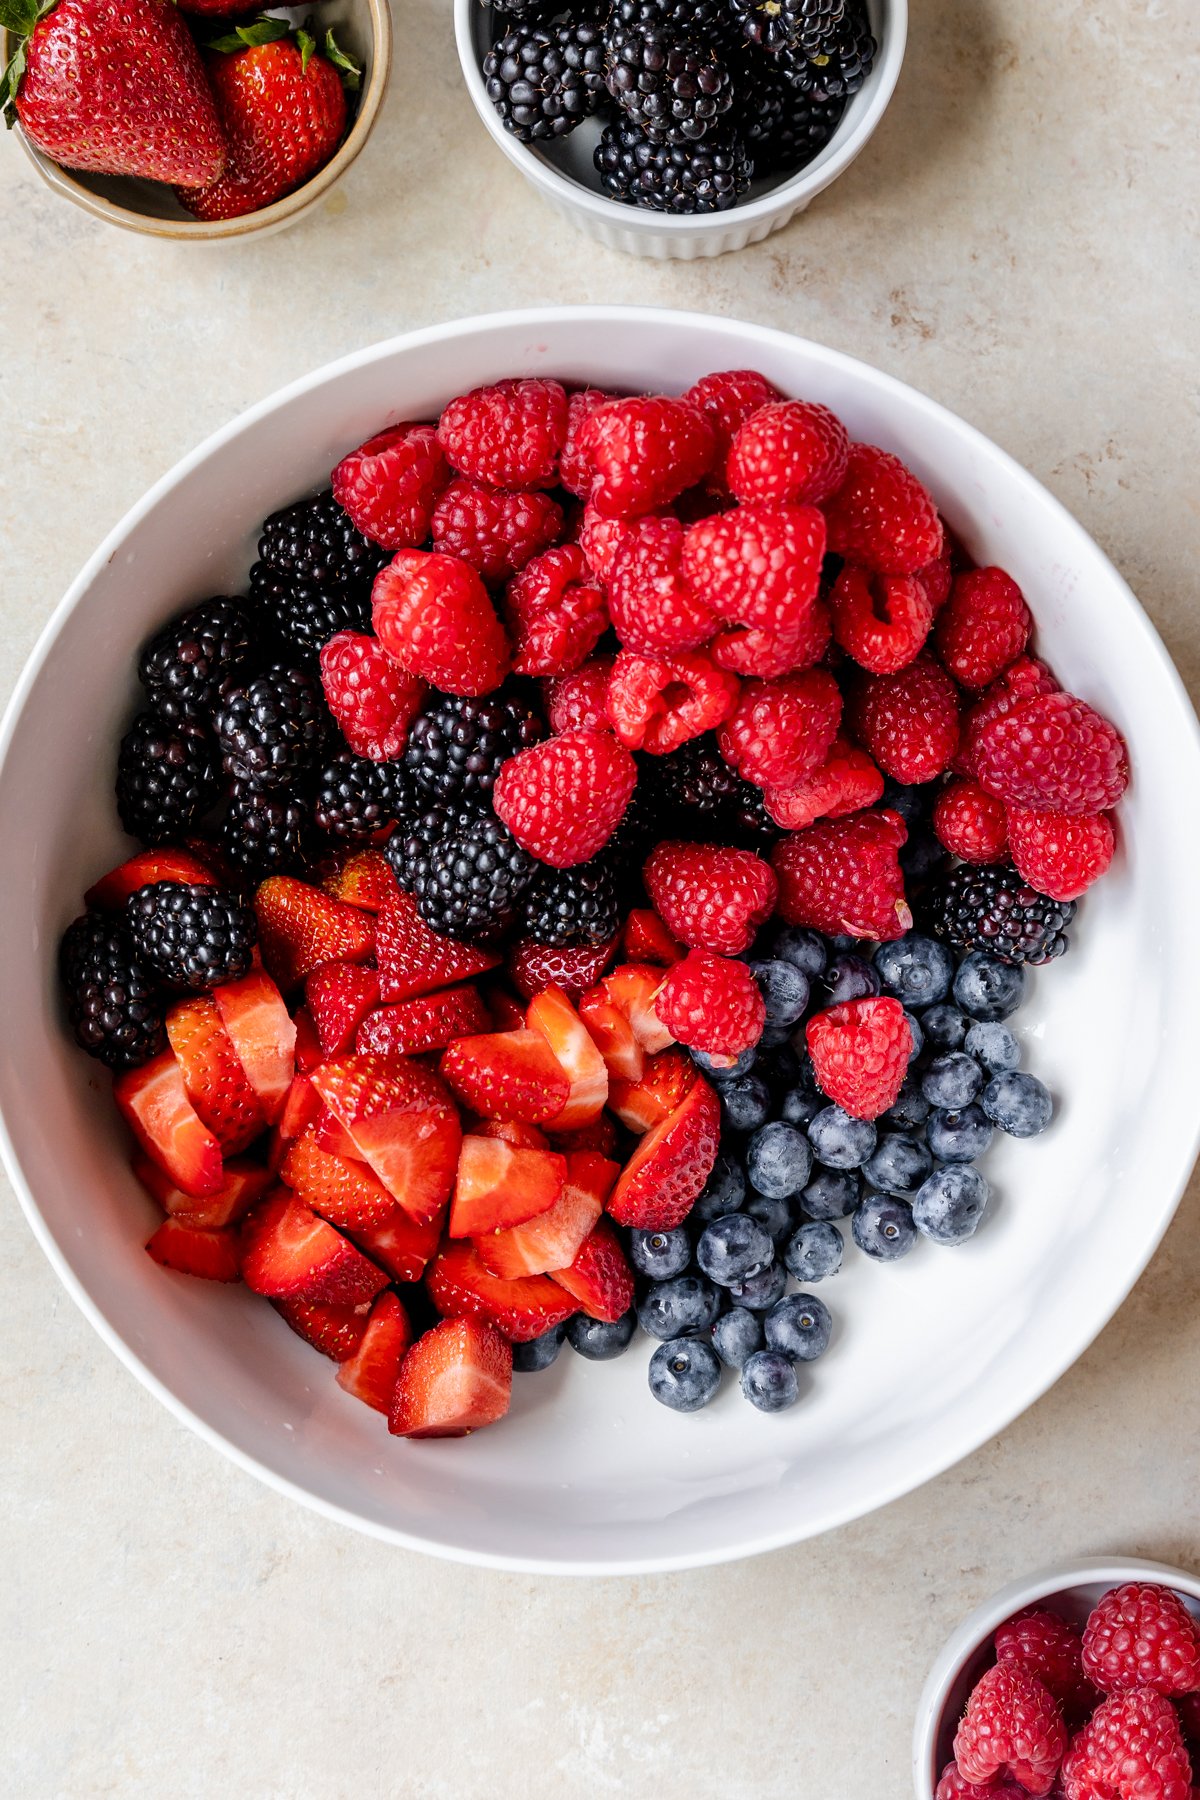 raspberries, blackberries, strawberries and blueberries in a large white bowl.